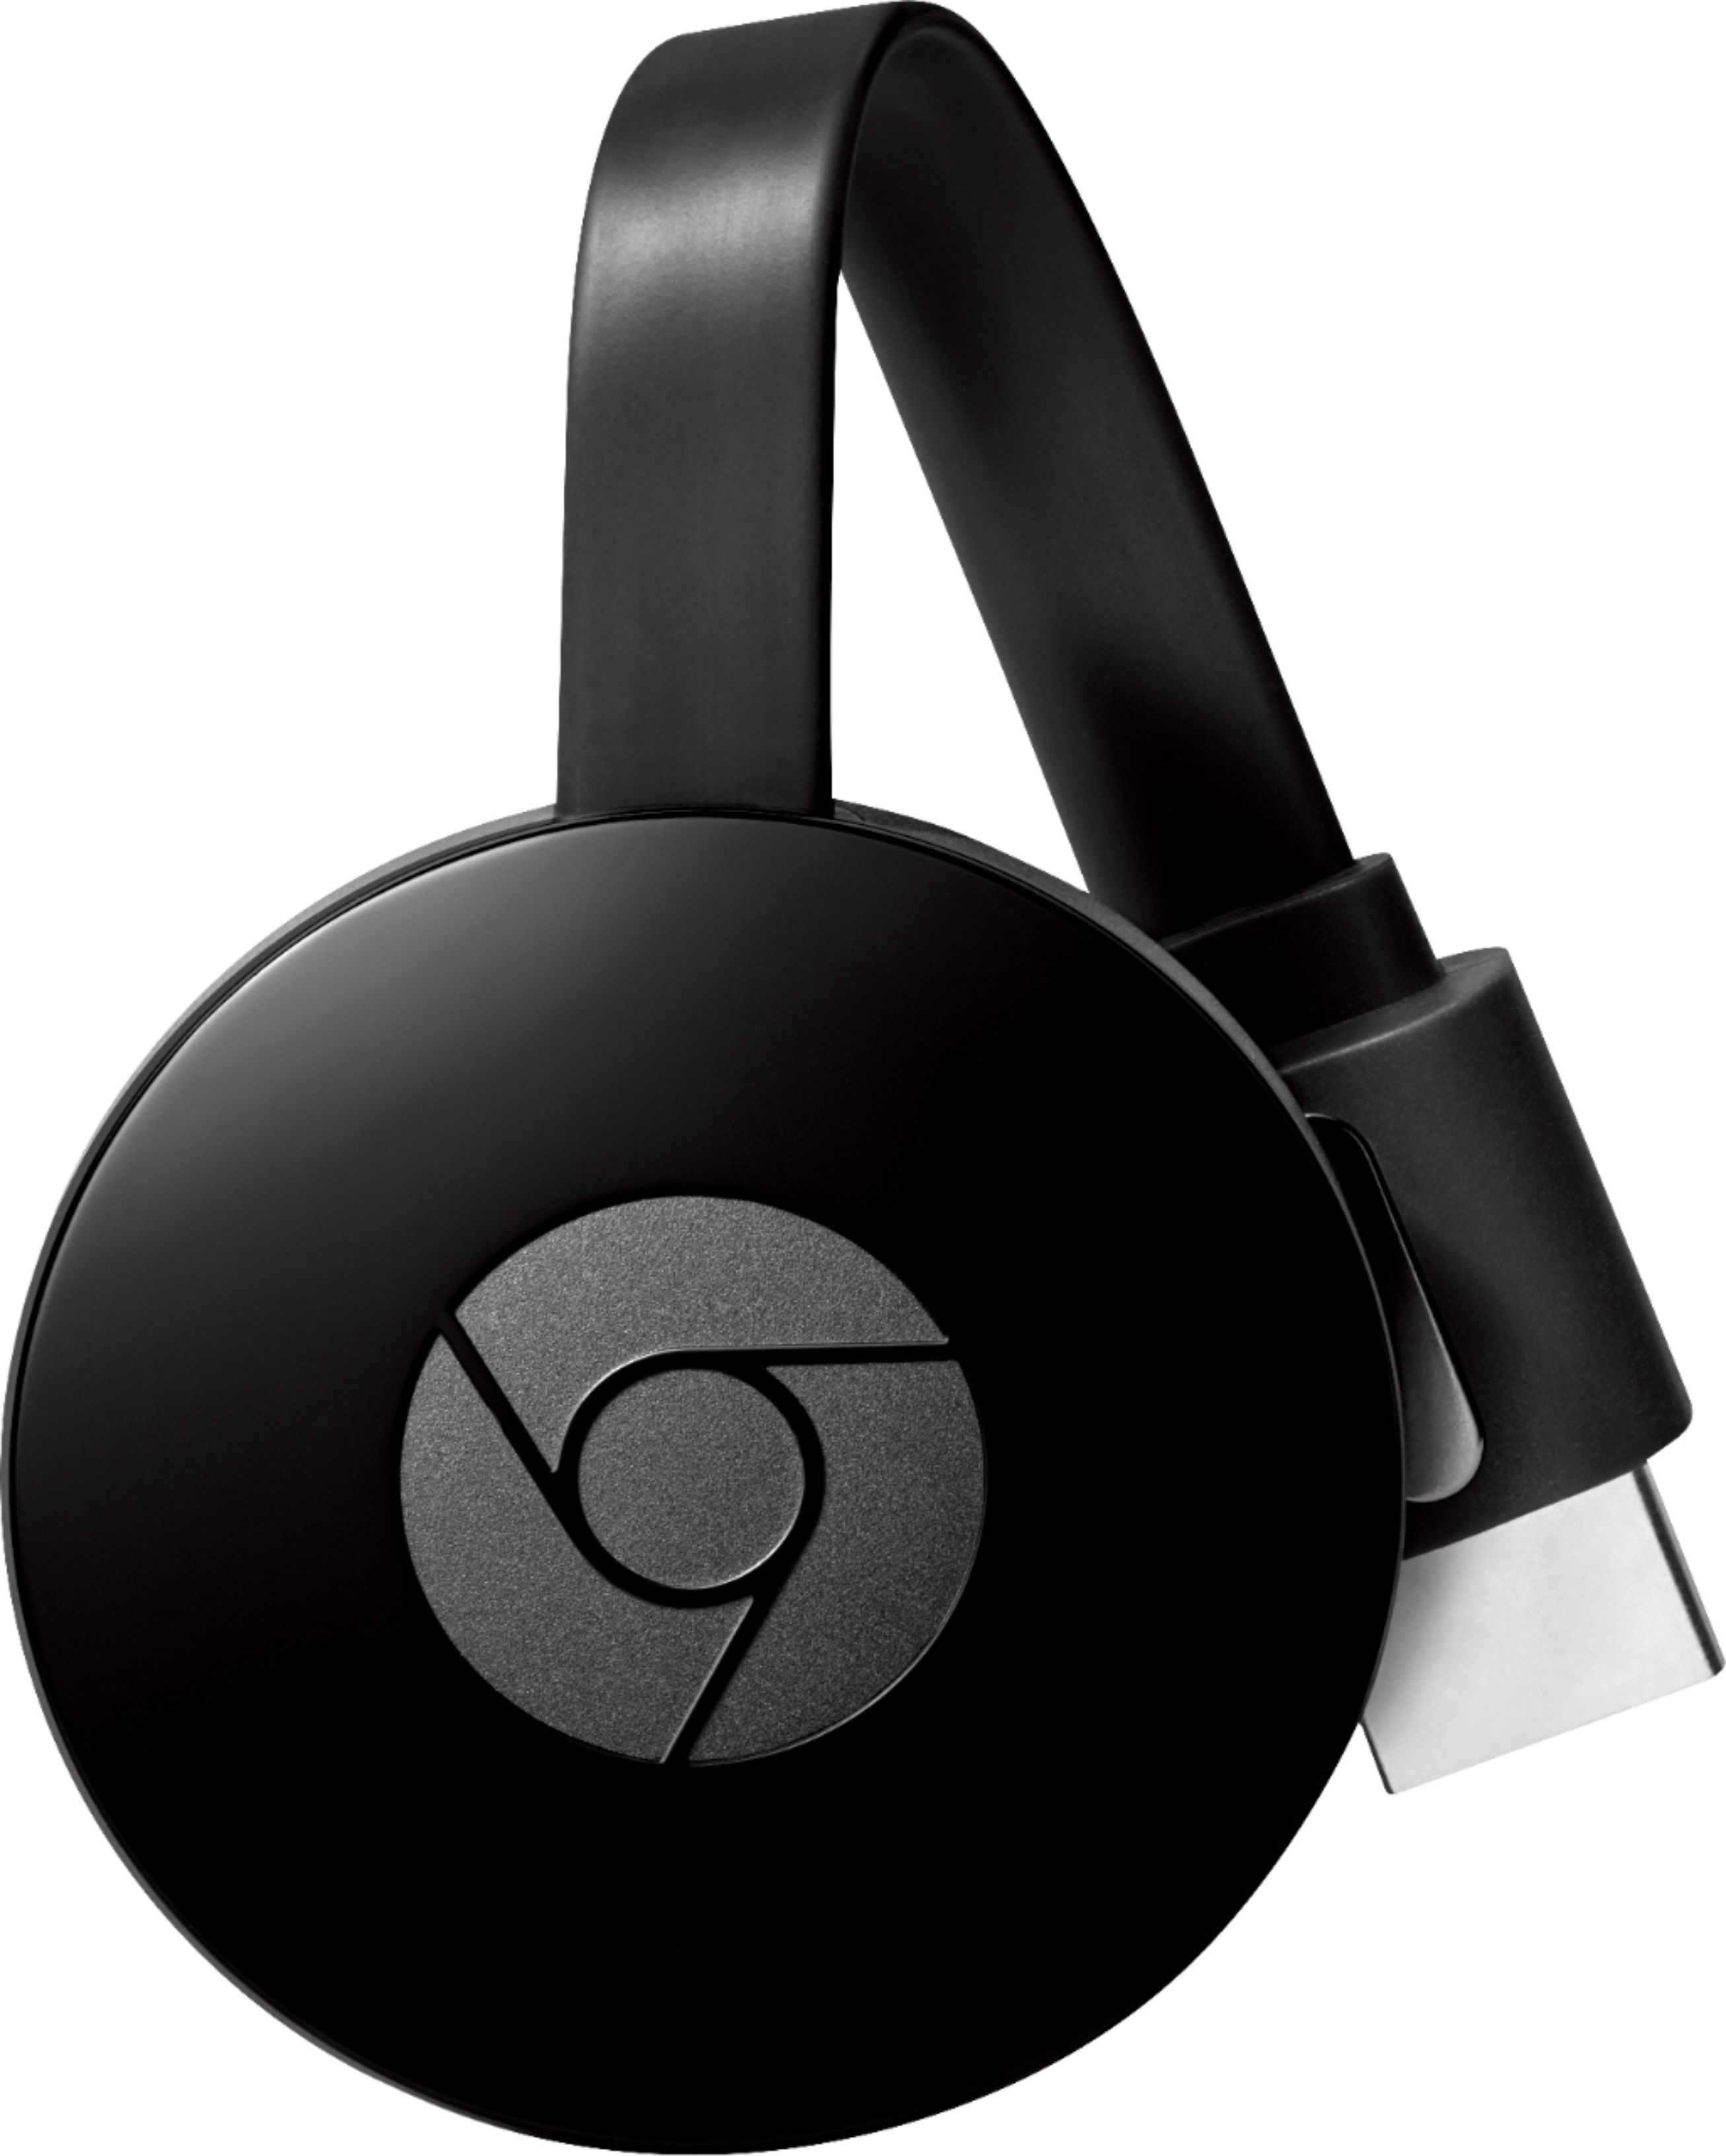 Google Chromecast Black NC2-6A5 Best Buy